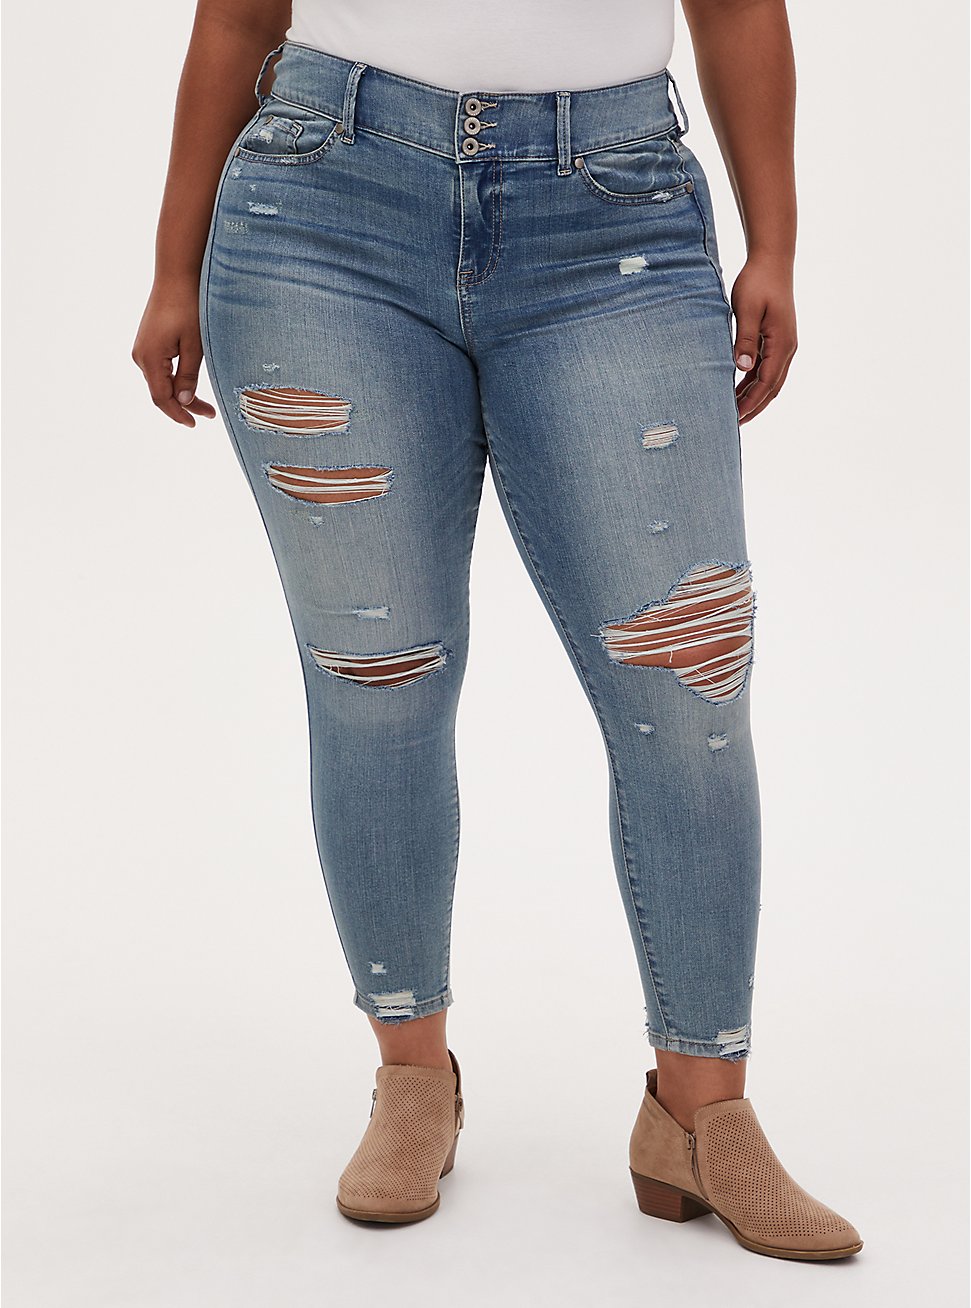 WOMEN FASHION Jeans NO STYLE discount 99% Zara Jeggings & Skinny & Slim Black 36                  EU 